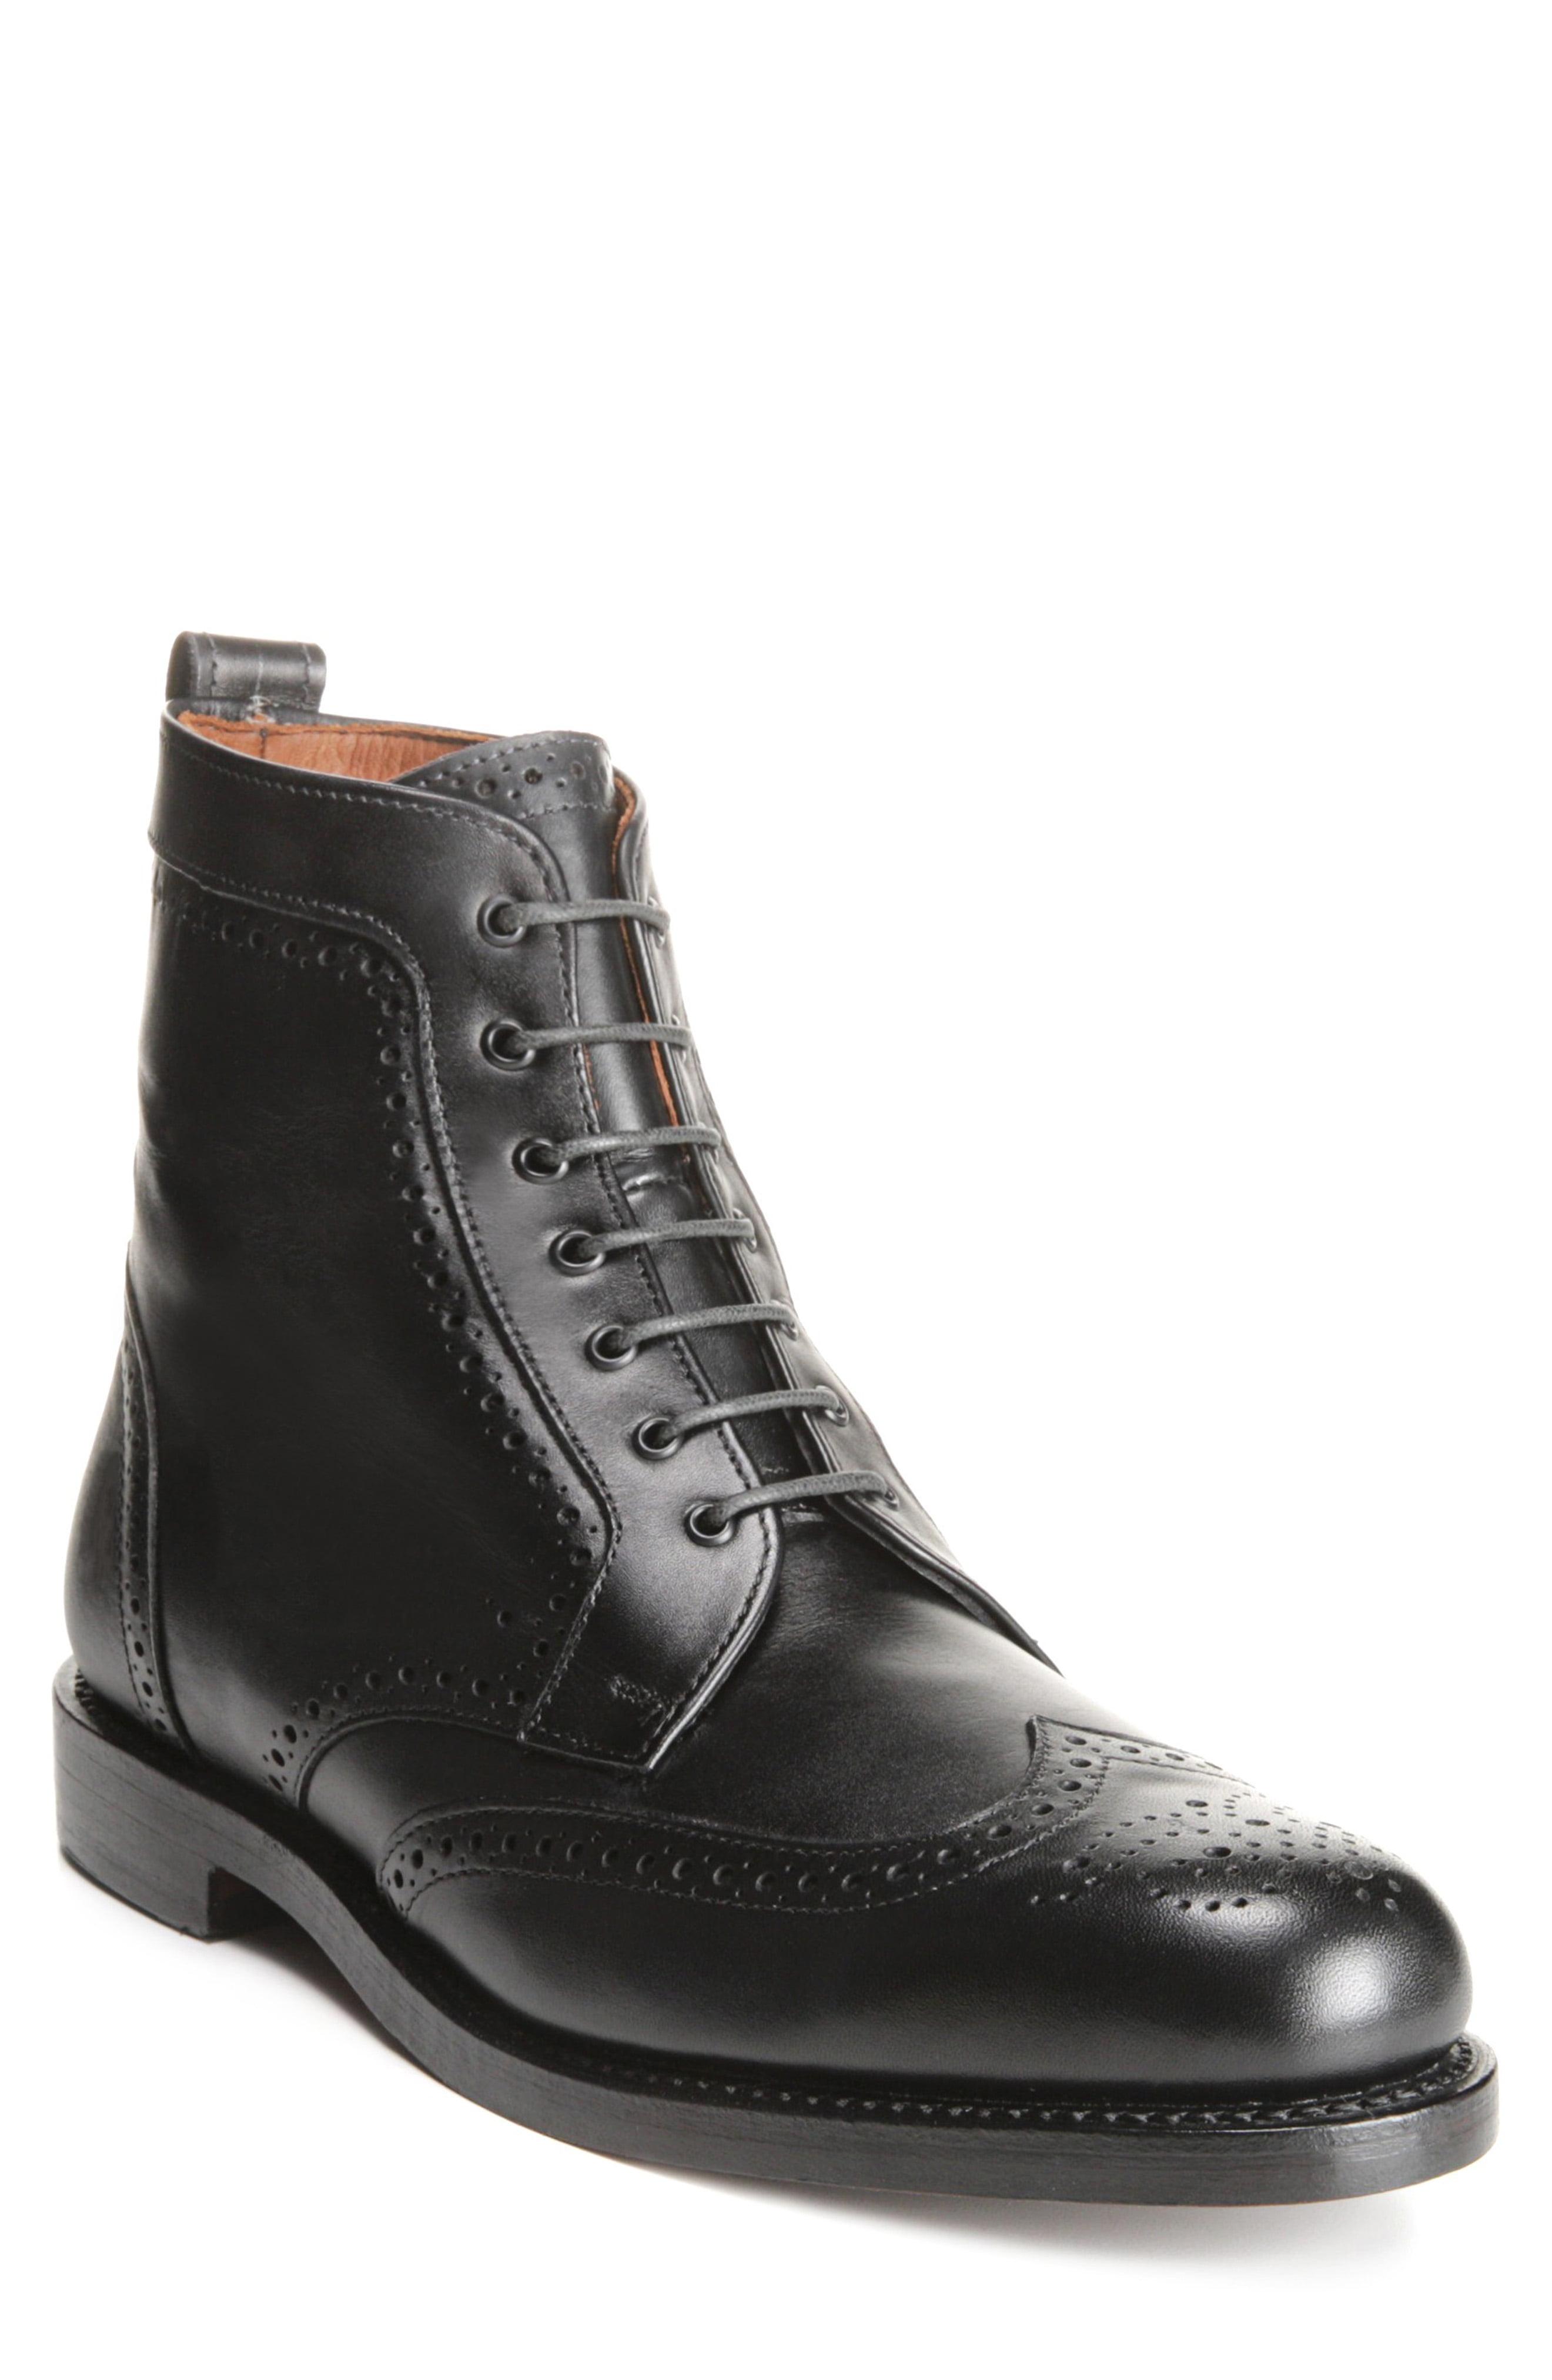 Allen Edmonds Leather 'dalton' Wingtip Boot in Black for Men - Lyst